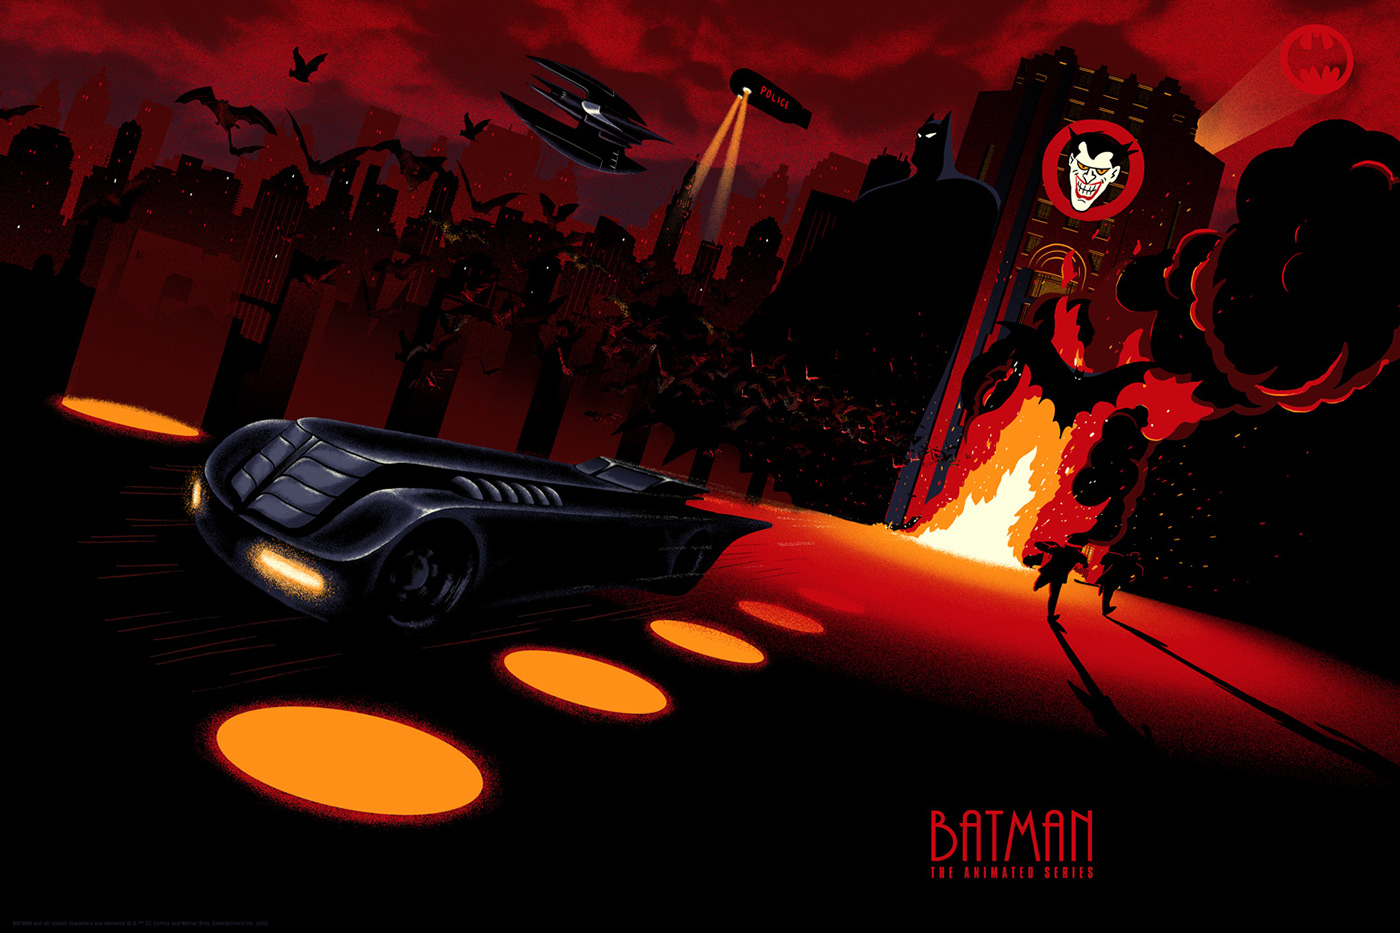 BATMAN: THE ANIMATED SERIES on Behance